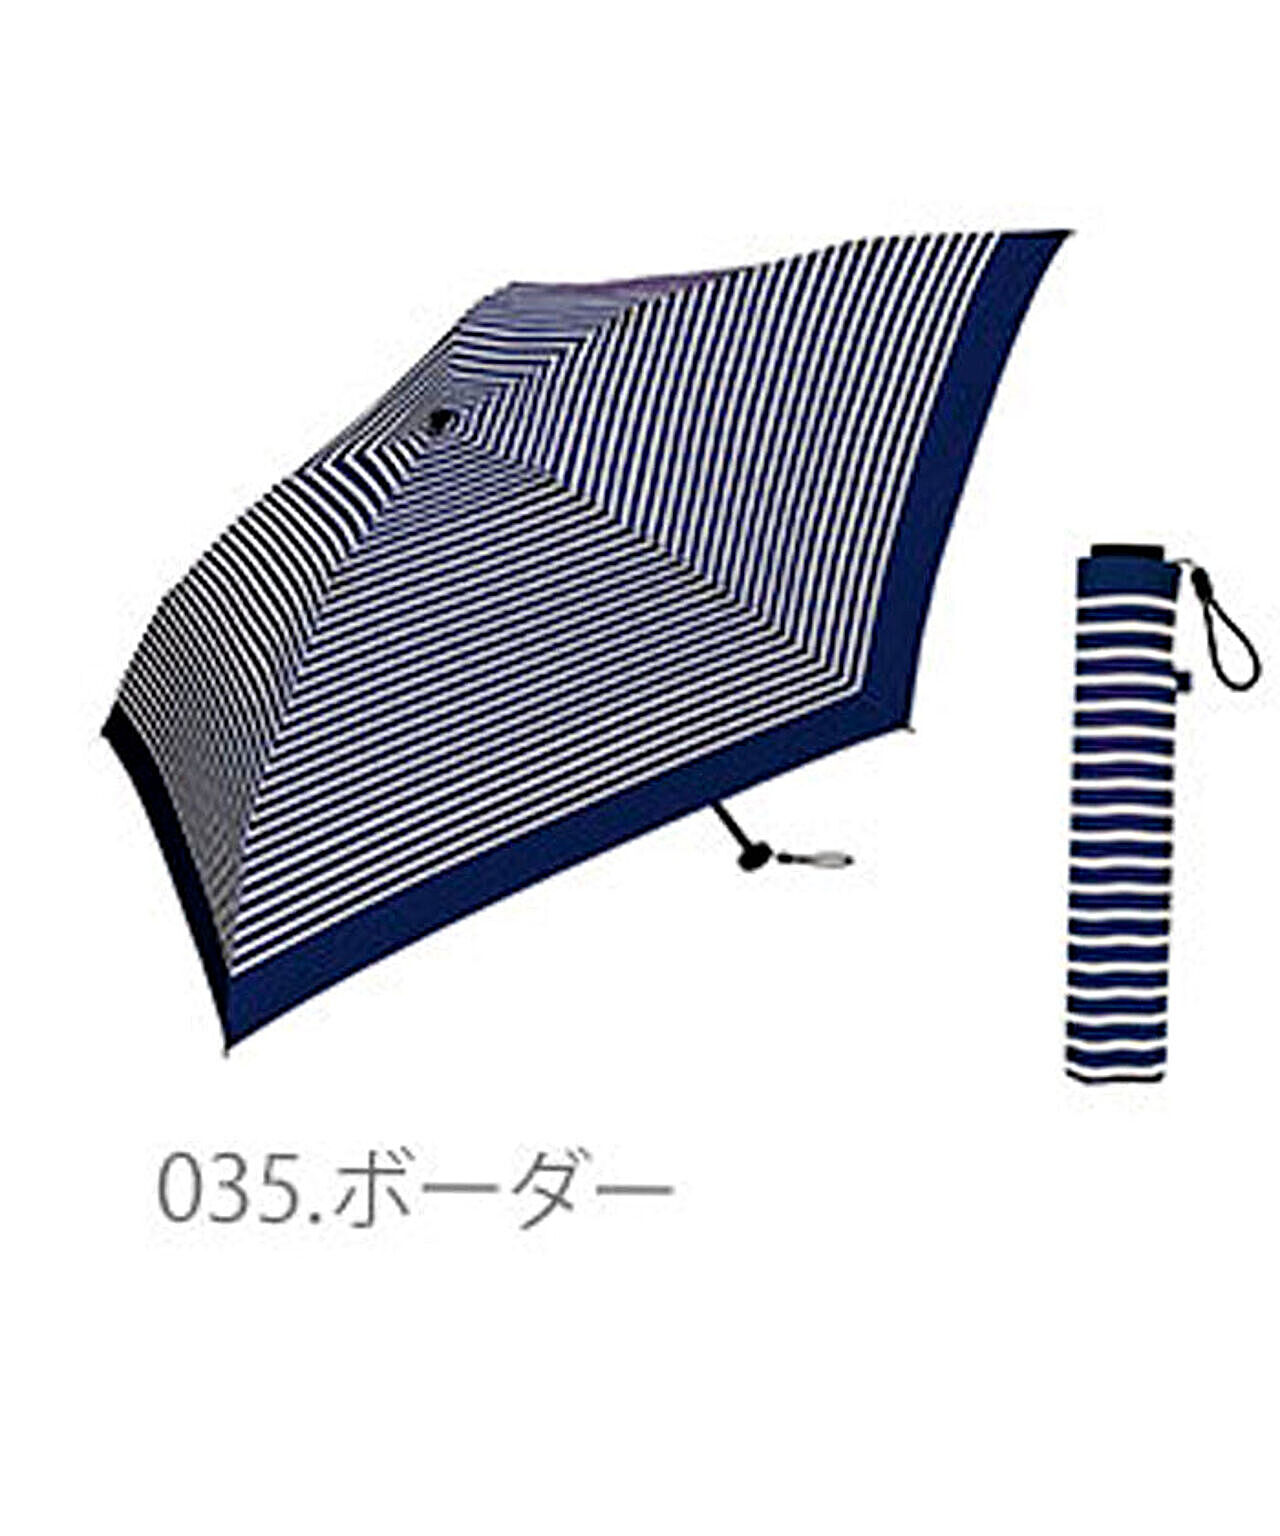 AIR-LIGHT LARGE60 UMBRELLA 折りたたみ傘